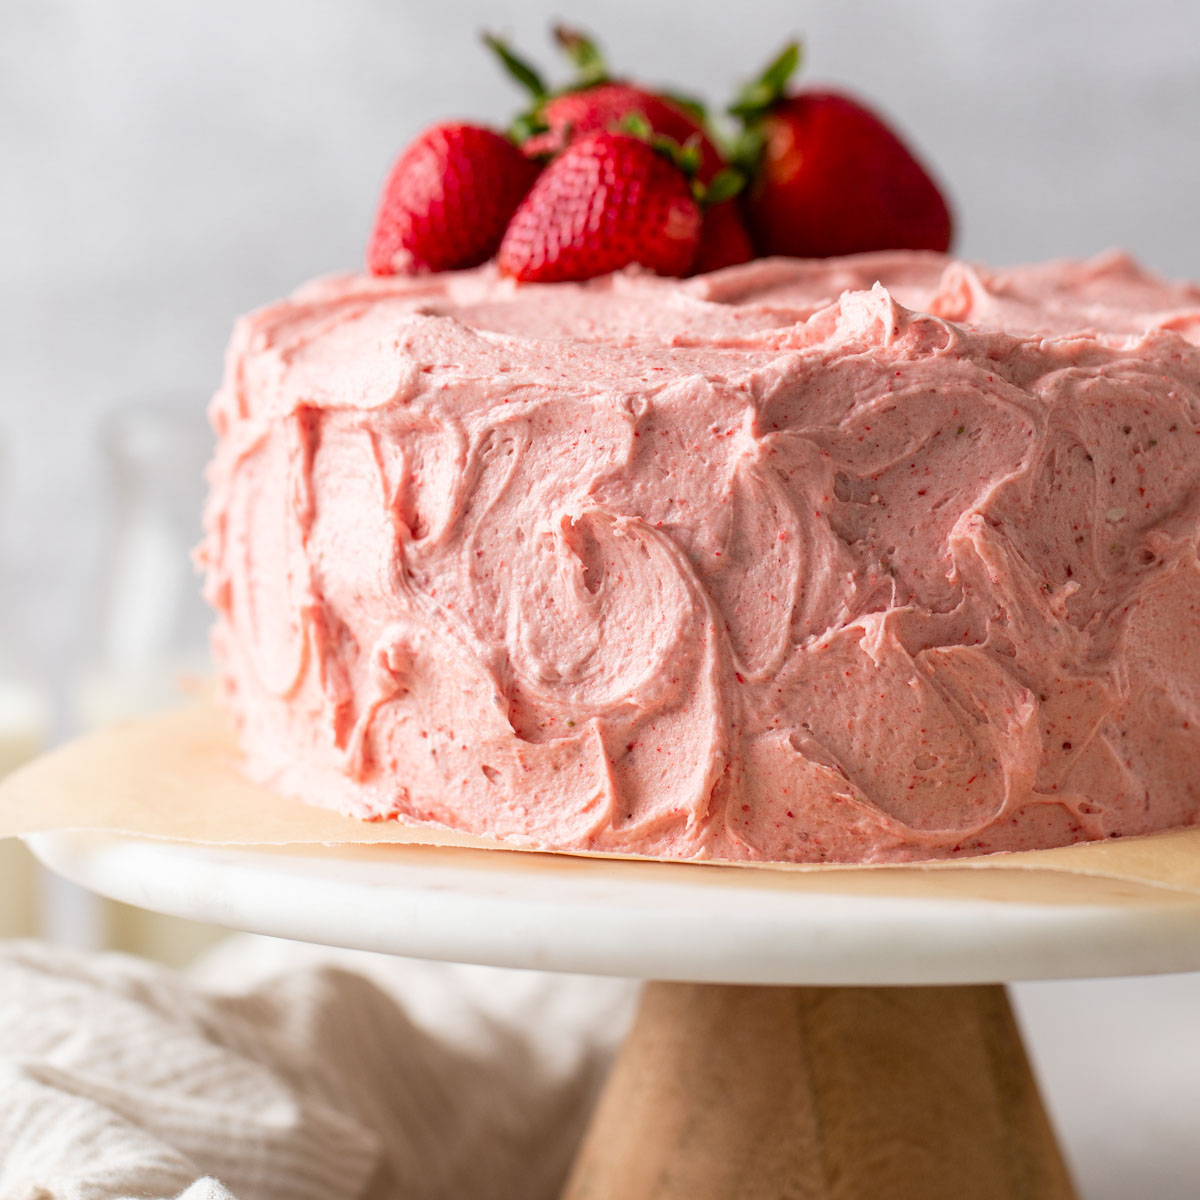 Sponge cake with cheat's strawberry jam and cream